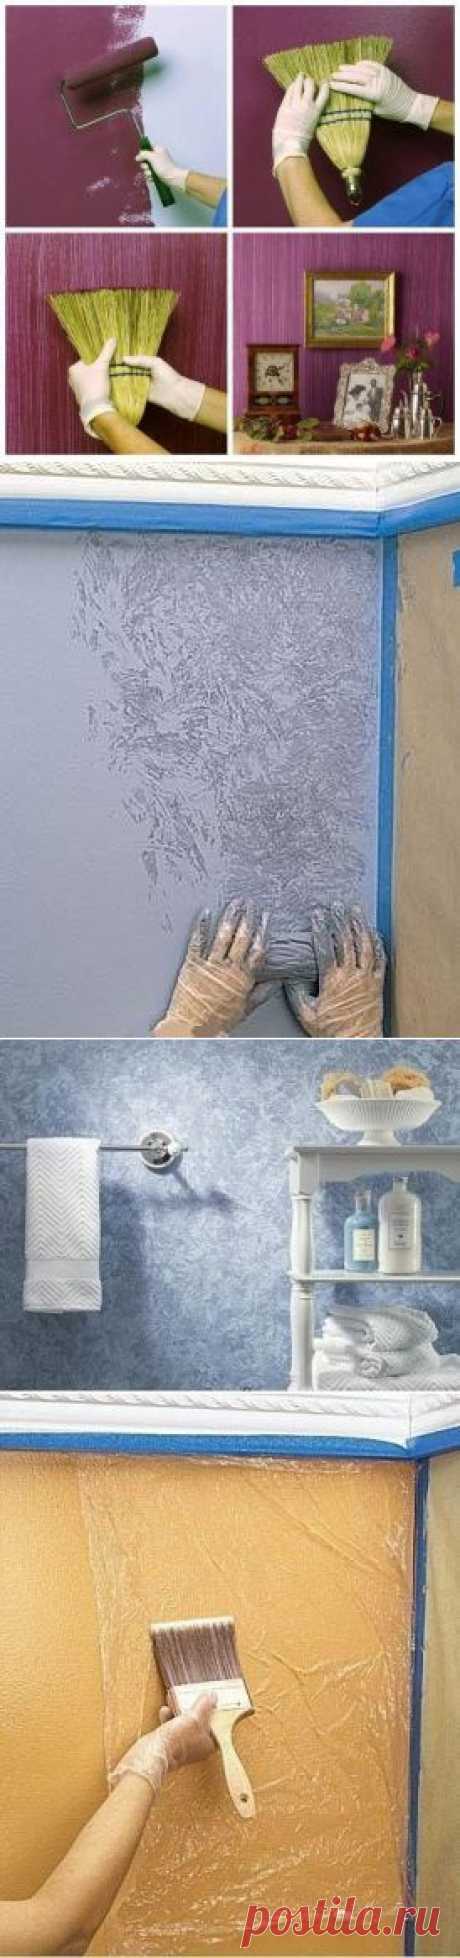 Интересные идеи при покраске стен...